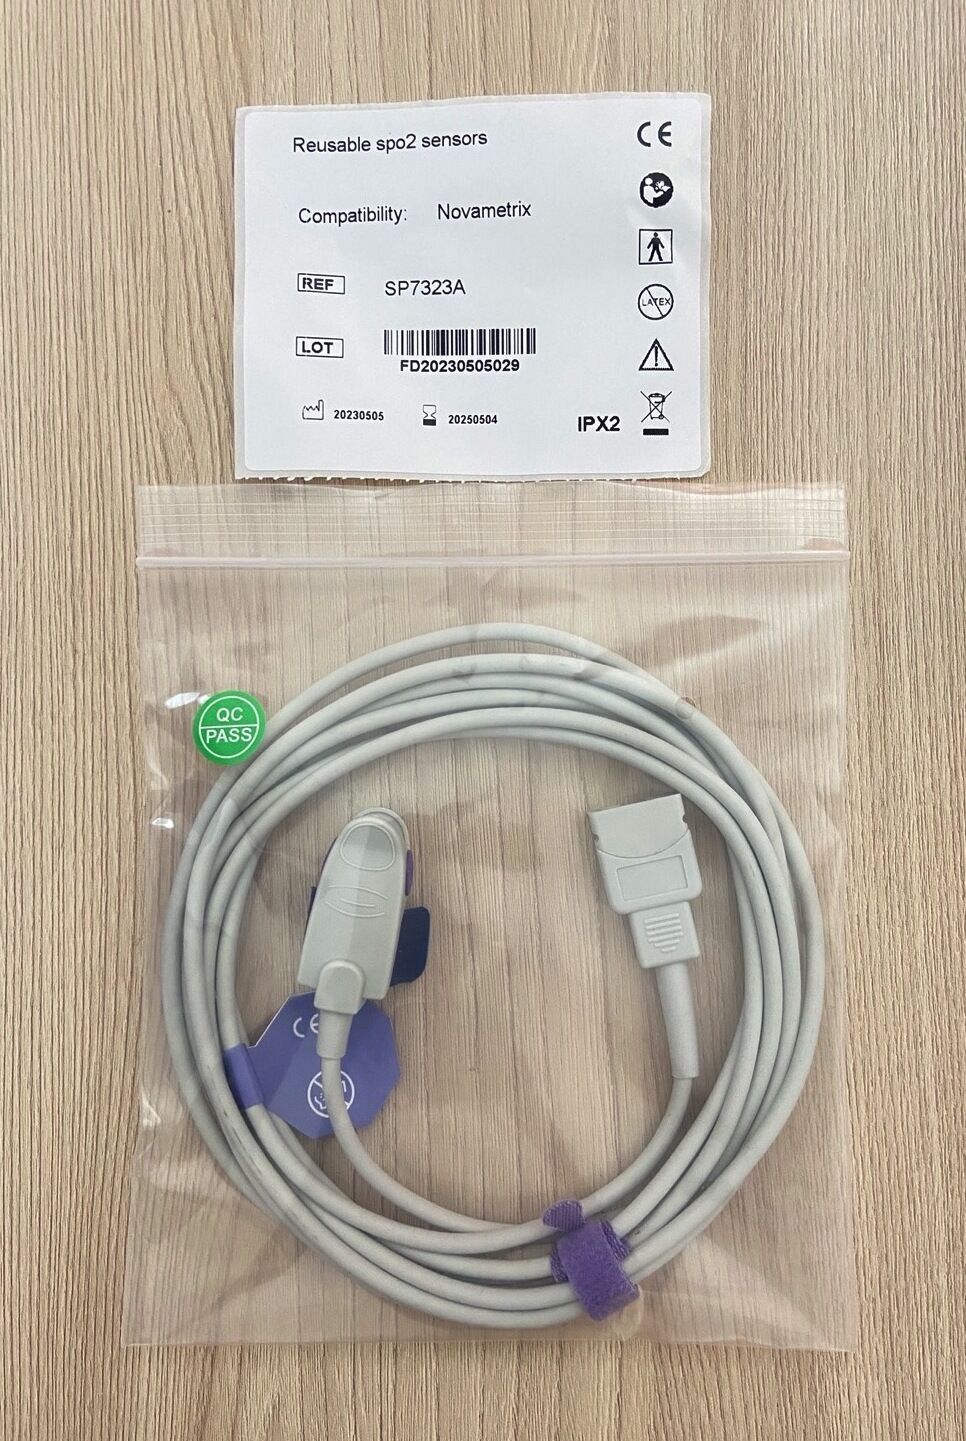 Spo2 Sensor Child clip cable for Pusle Oximeter Novametrix Respironics 512_สายโพรบวัดออกซิเจนที่ปลายนิ้วสำหรับเด็กโตเครื่องพัลส์ออกซิมิเตอร์ Respironics รุ่น 512